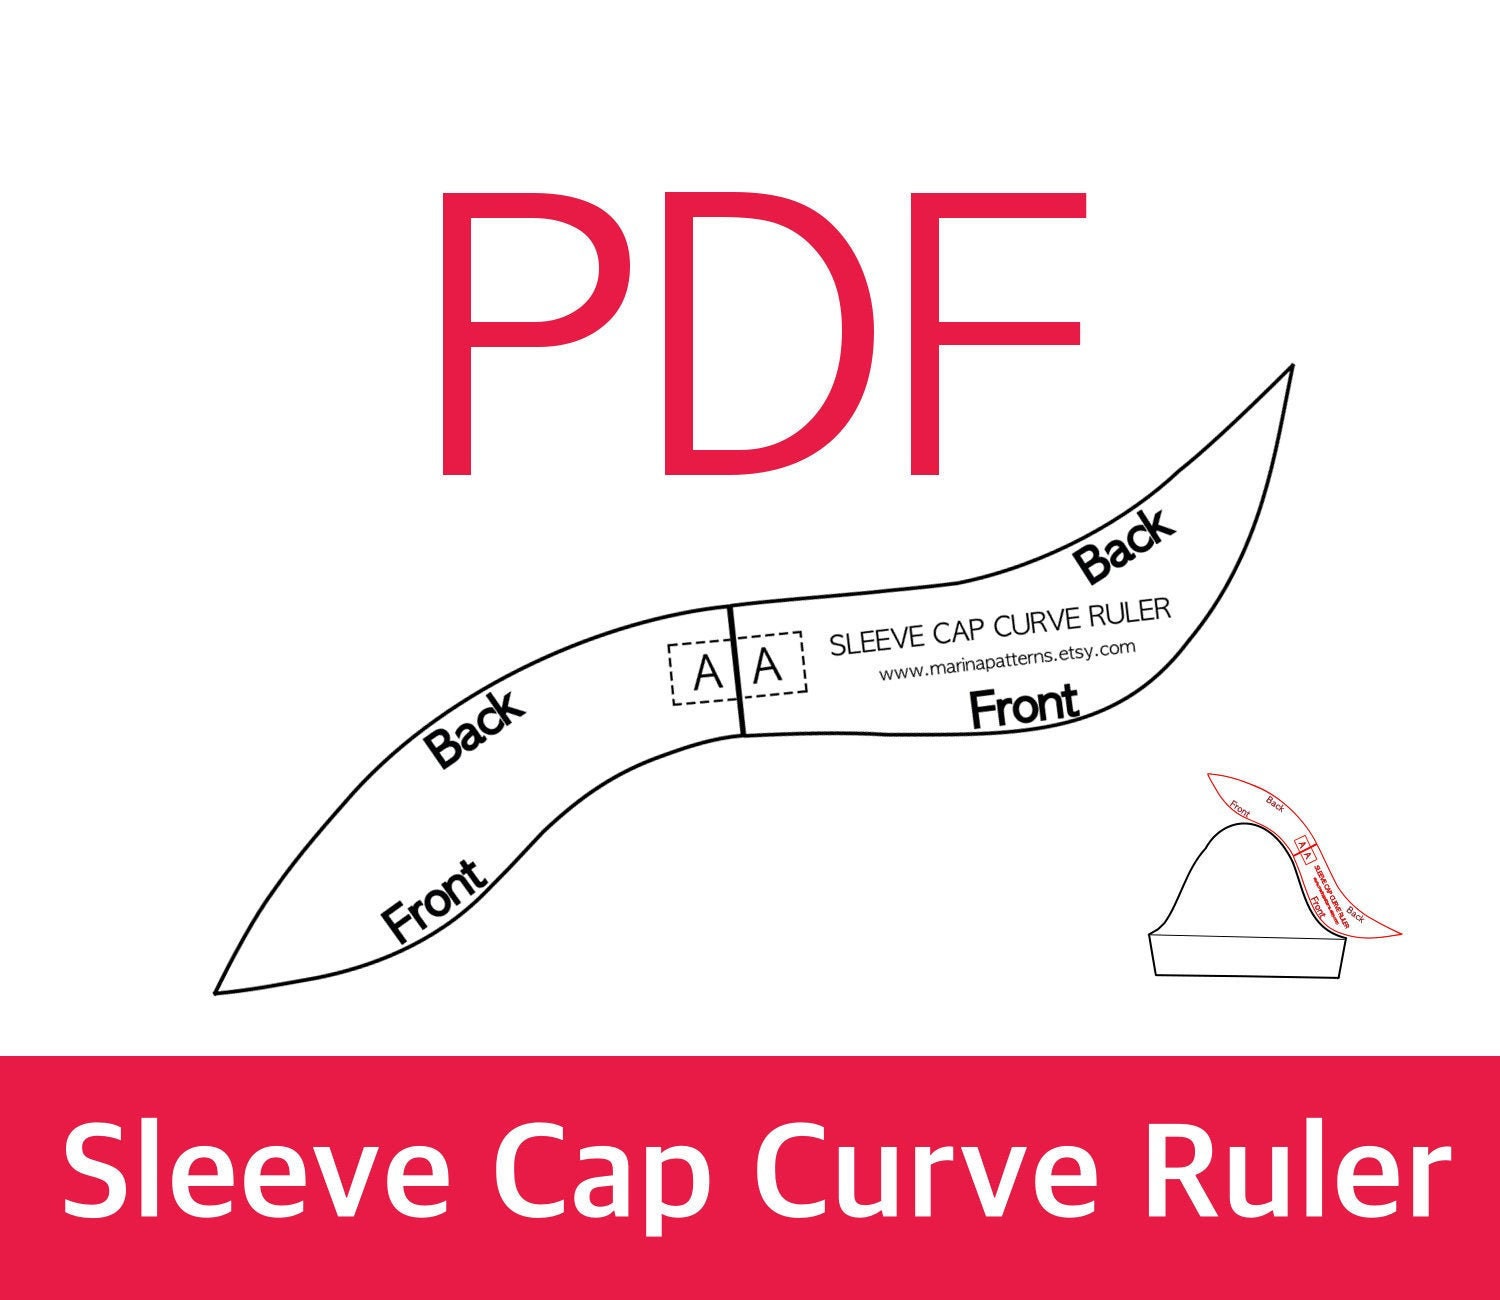 Sewing rulers curves gauges free download - SEWING RULERS, CURVES